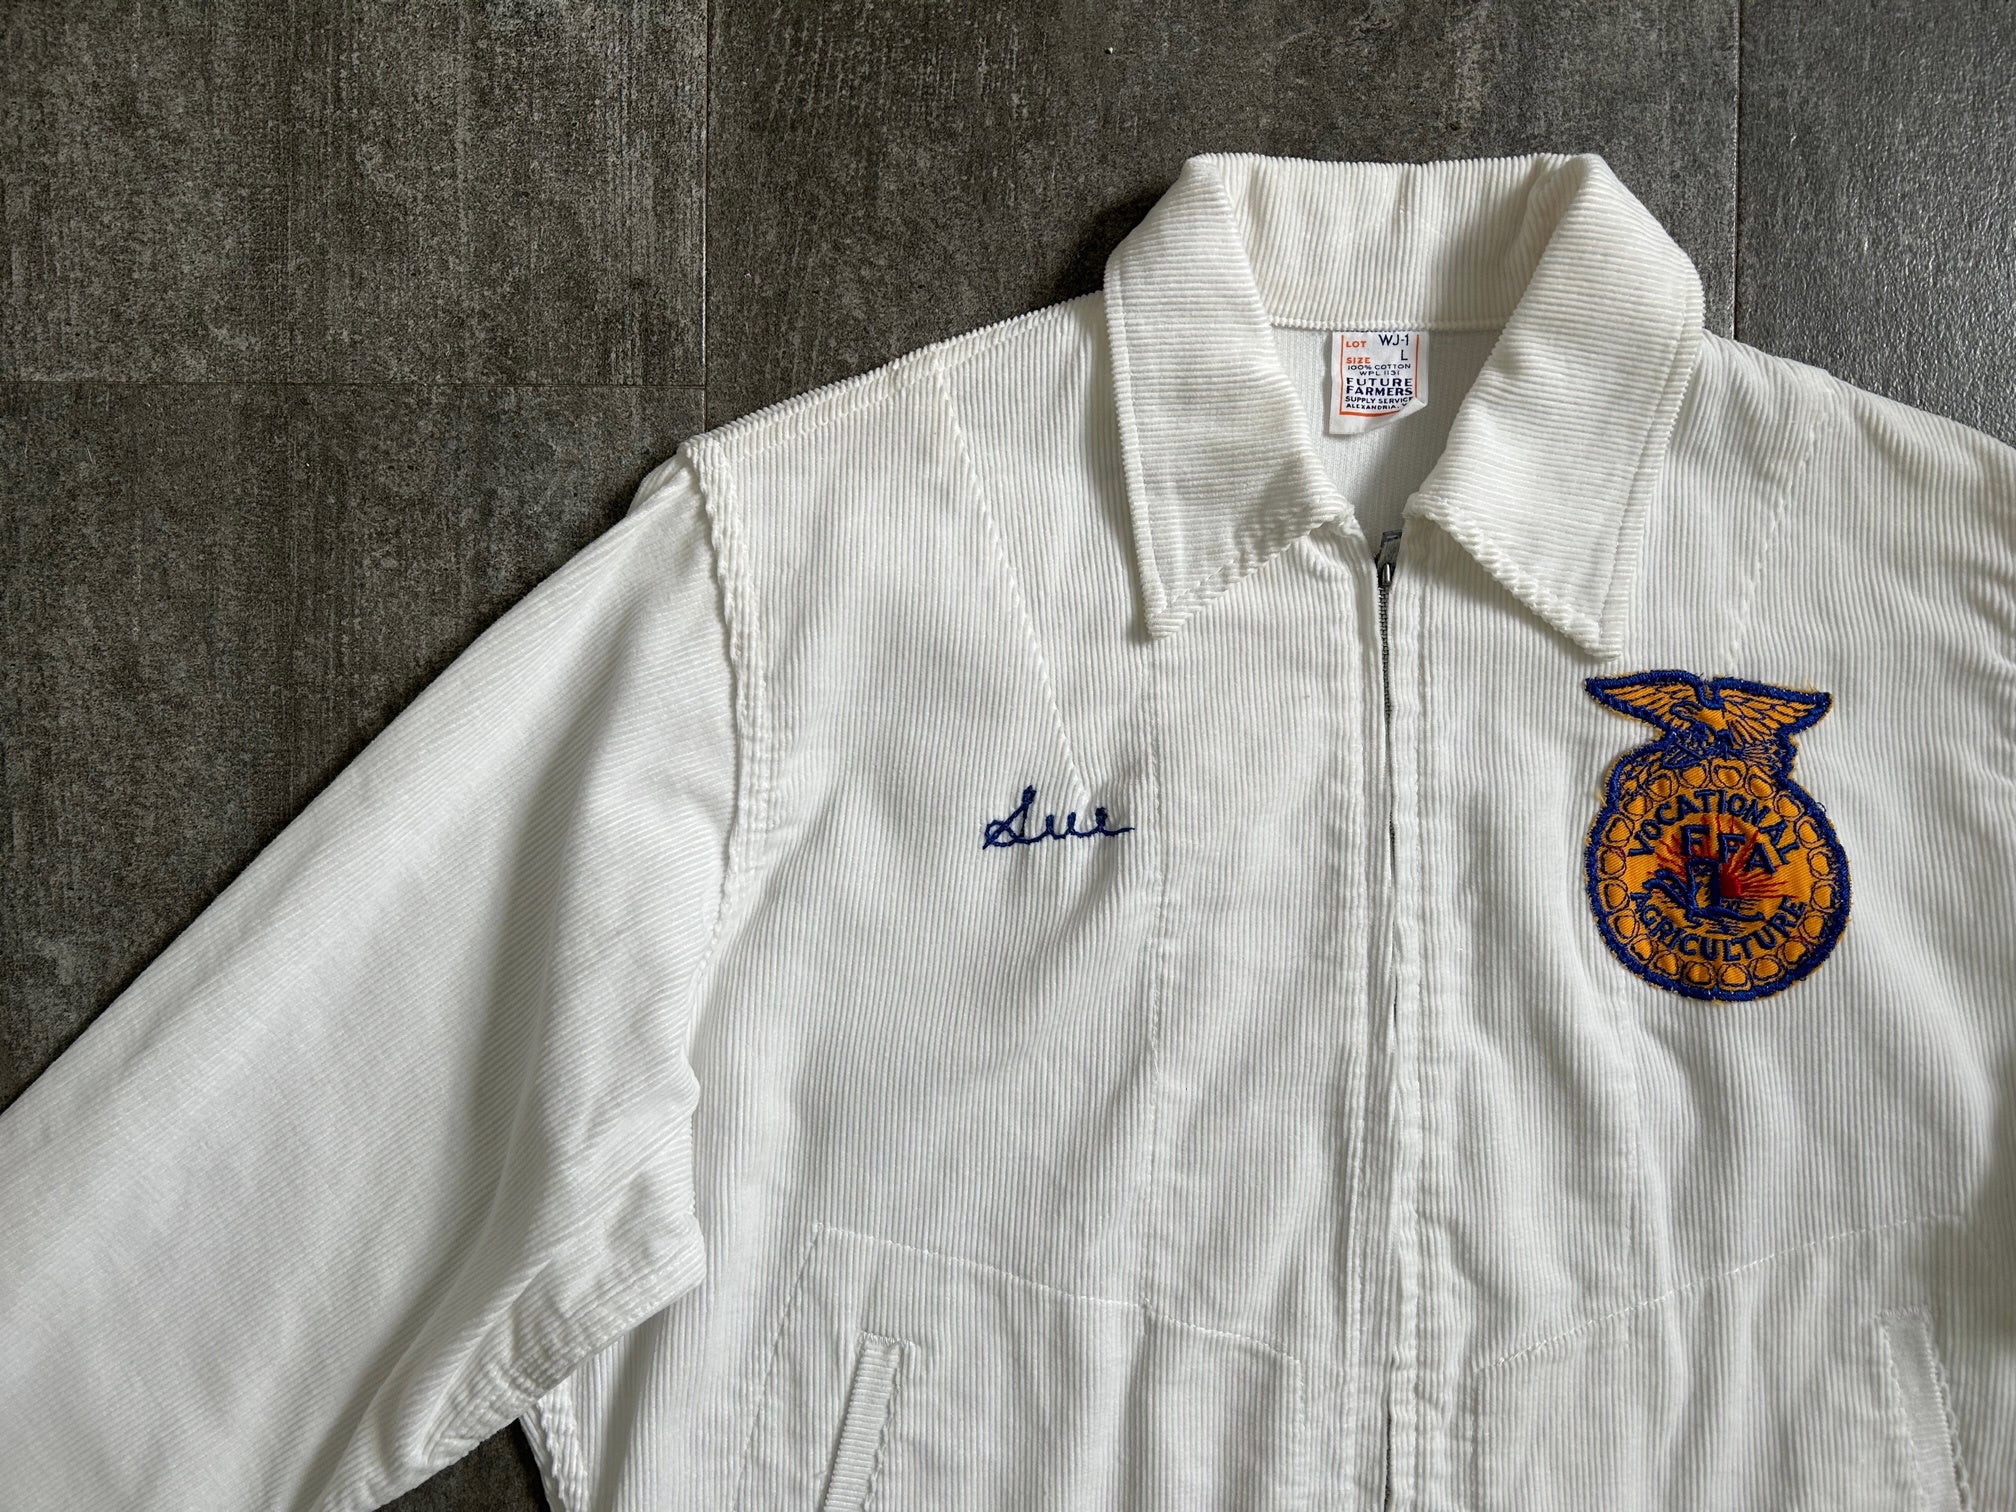 1960s FFA Sweetheart jacket . vintage corduroy jacket . size m to